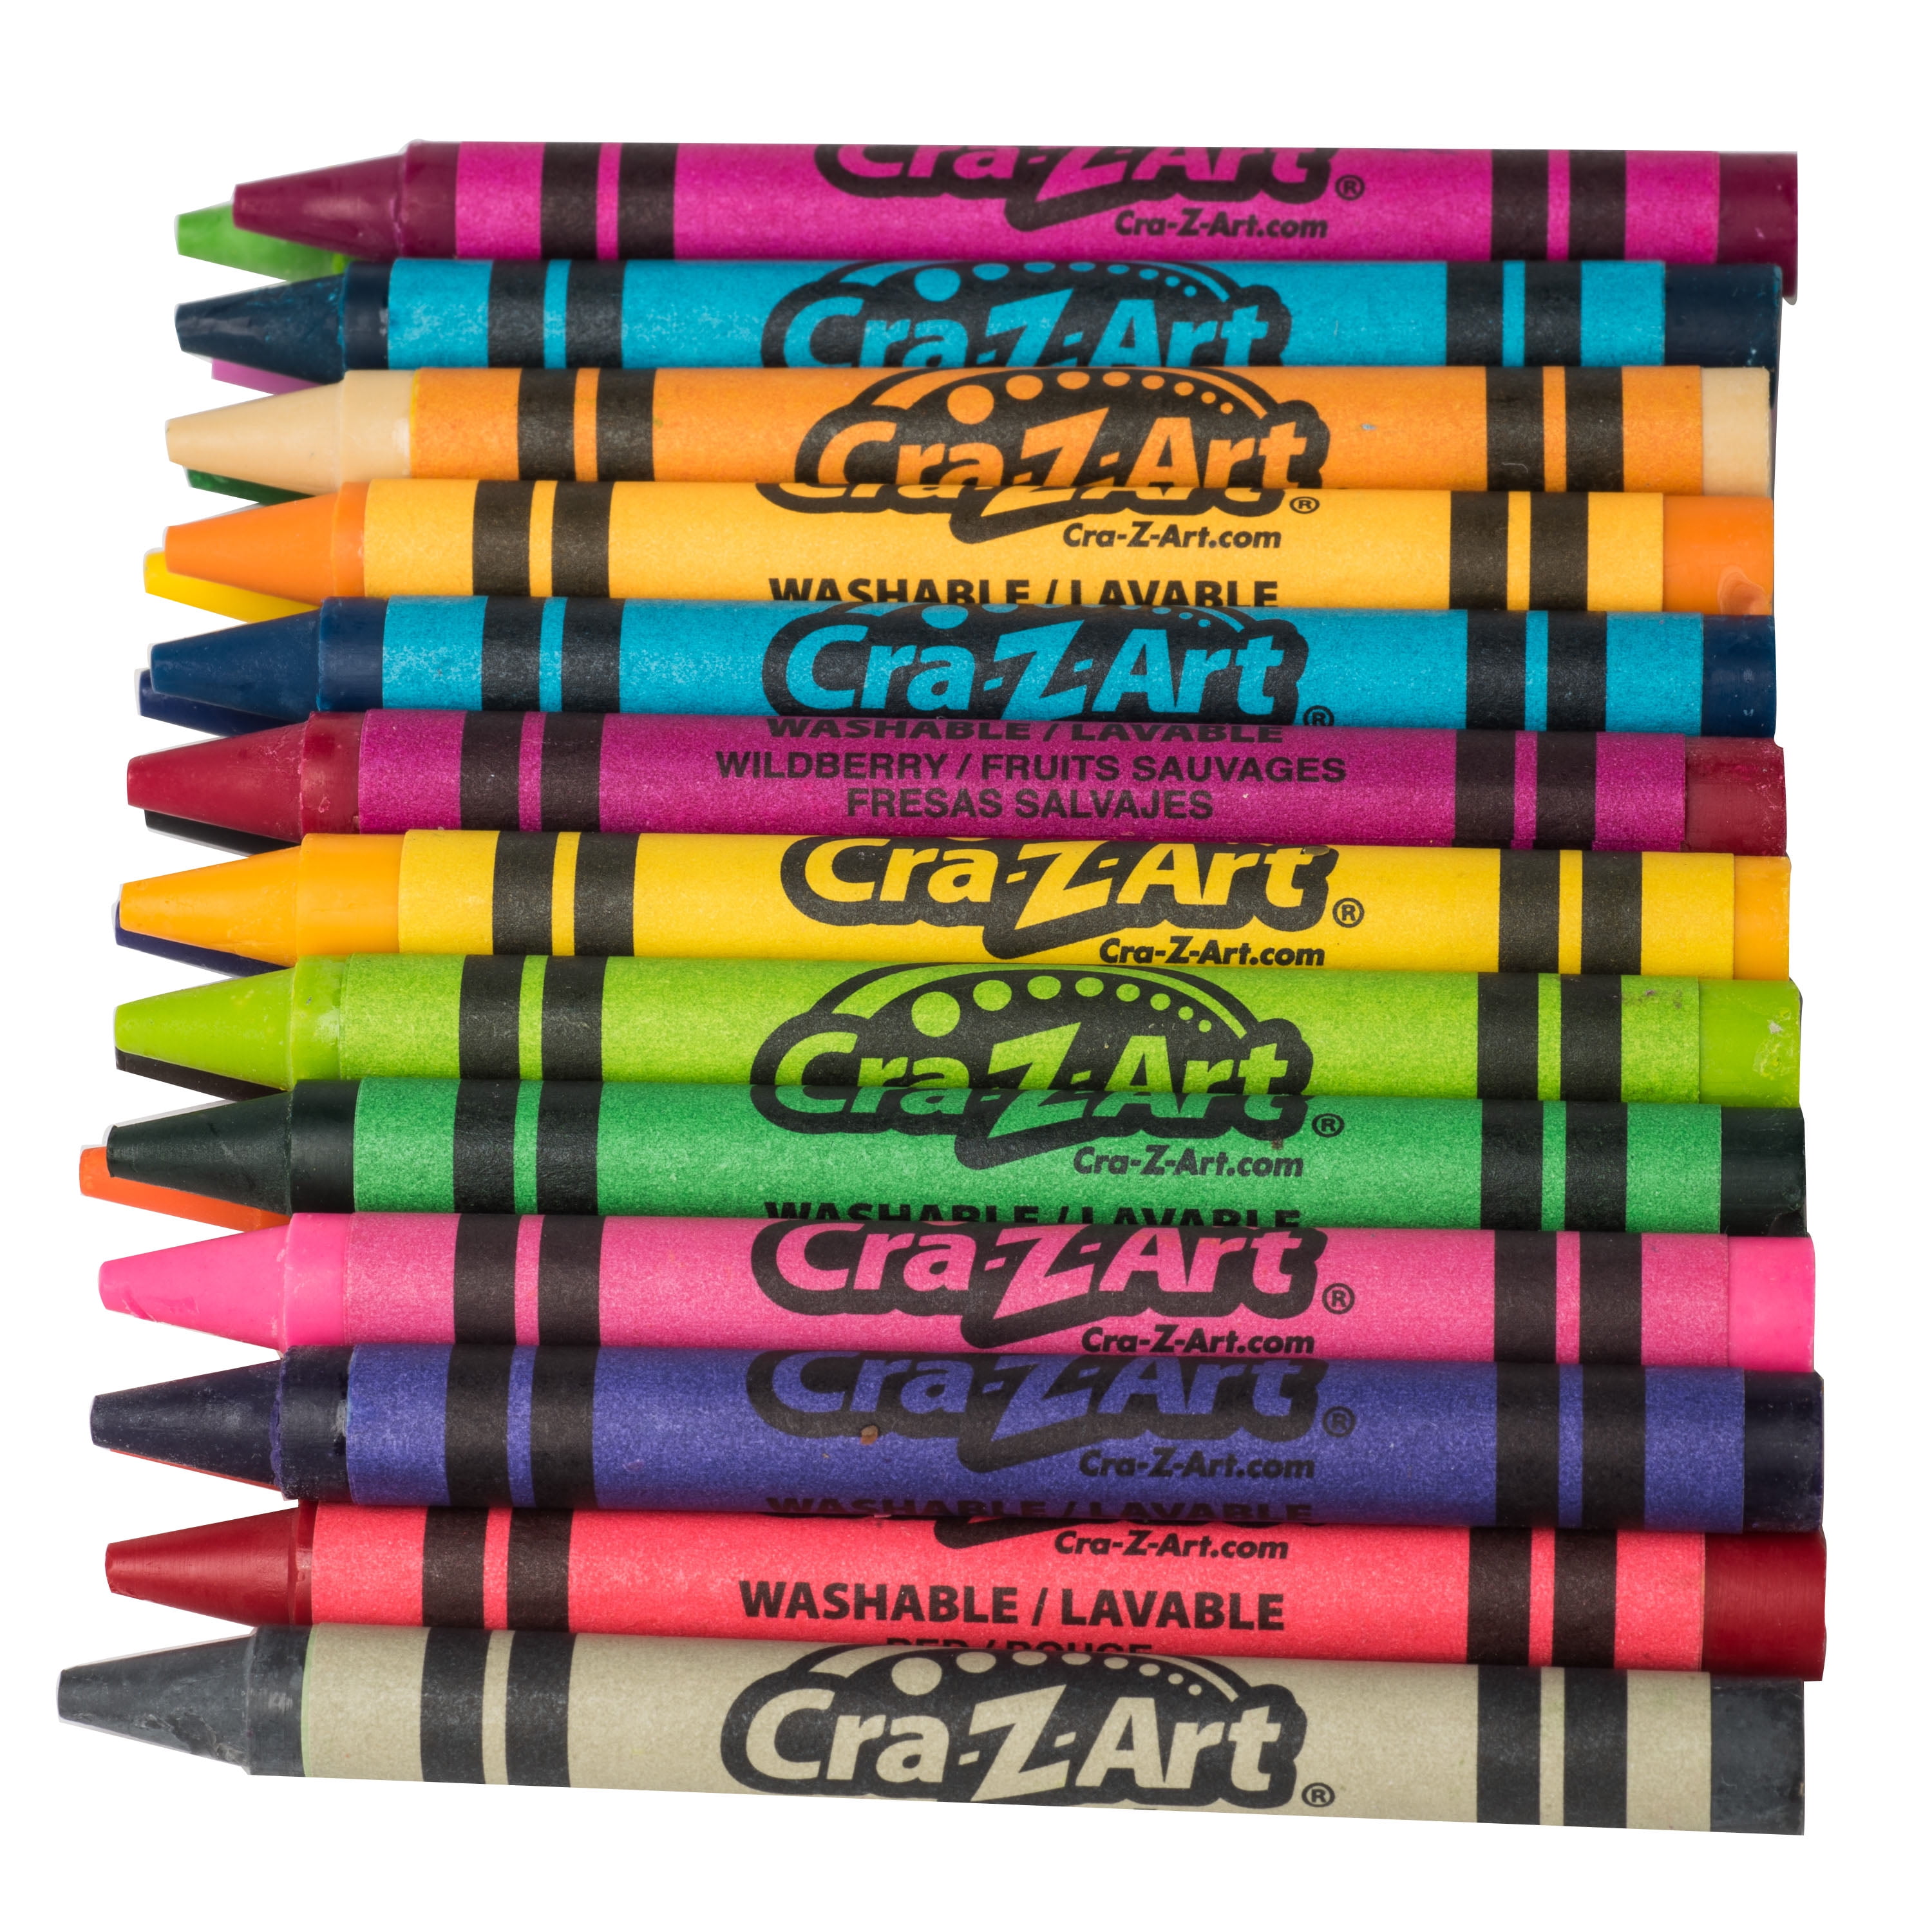 Artist Crayons